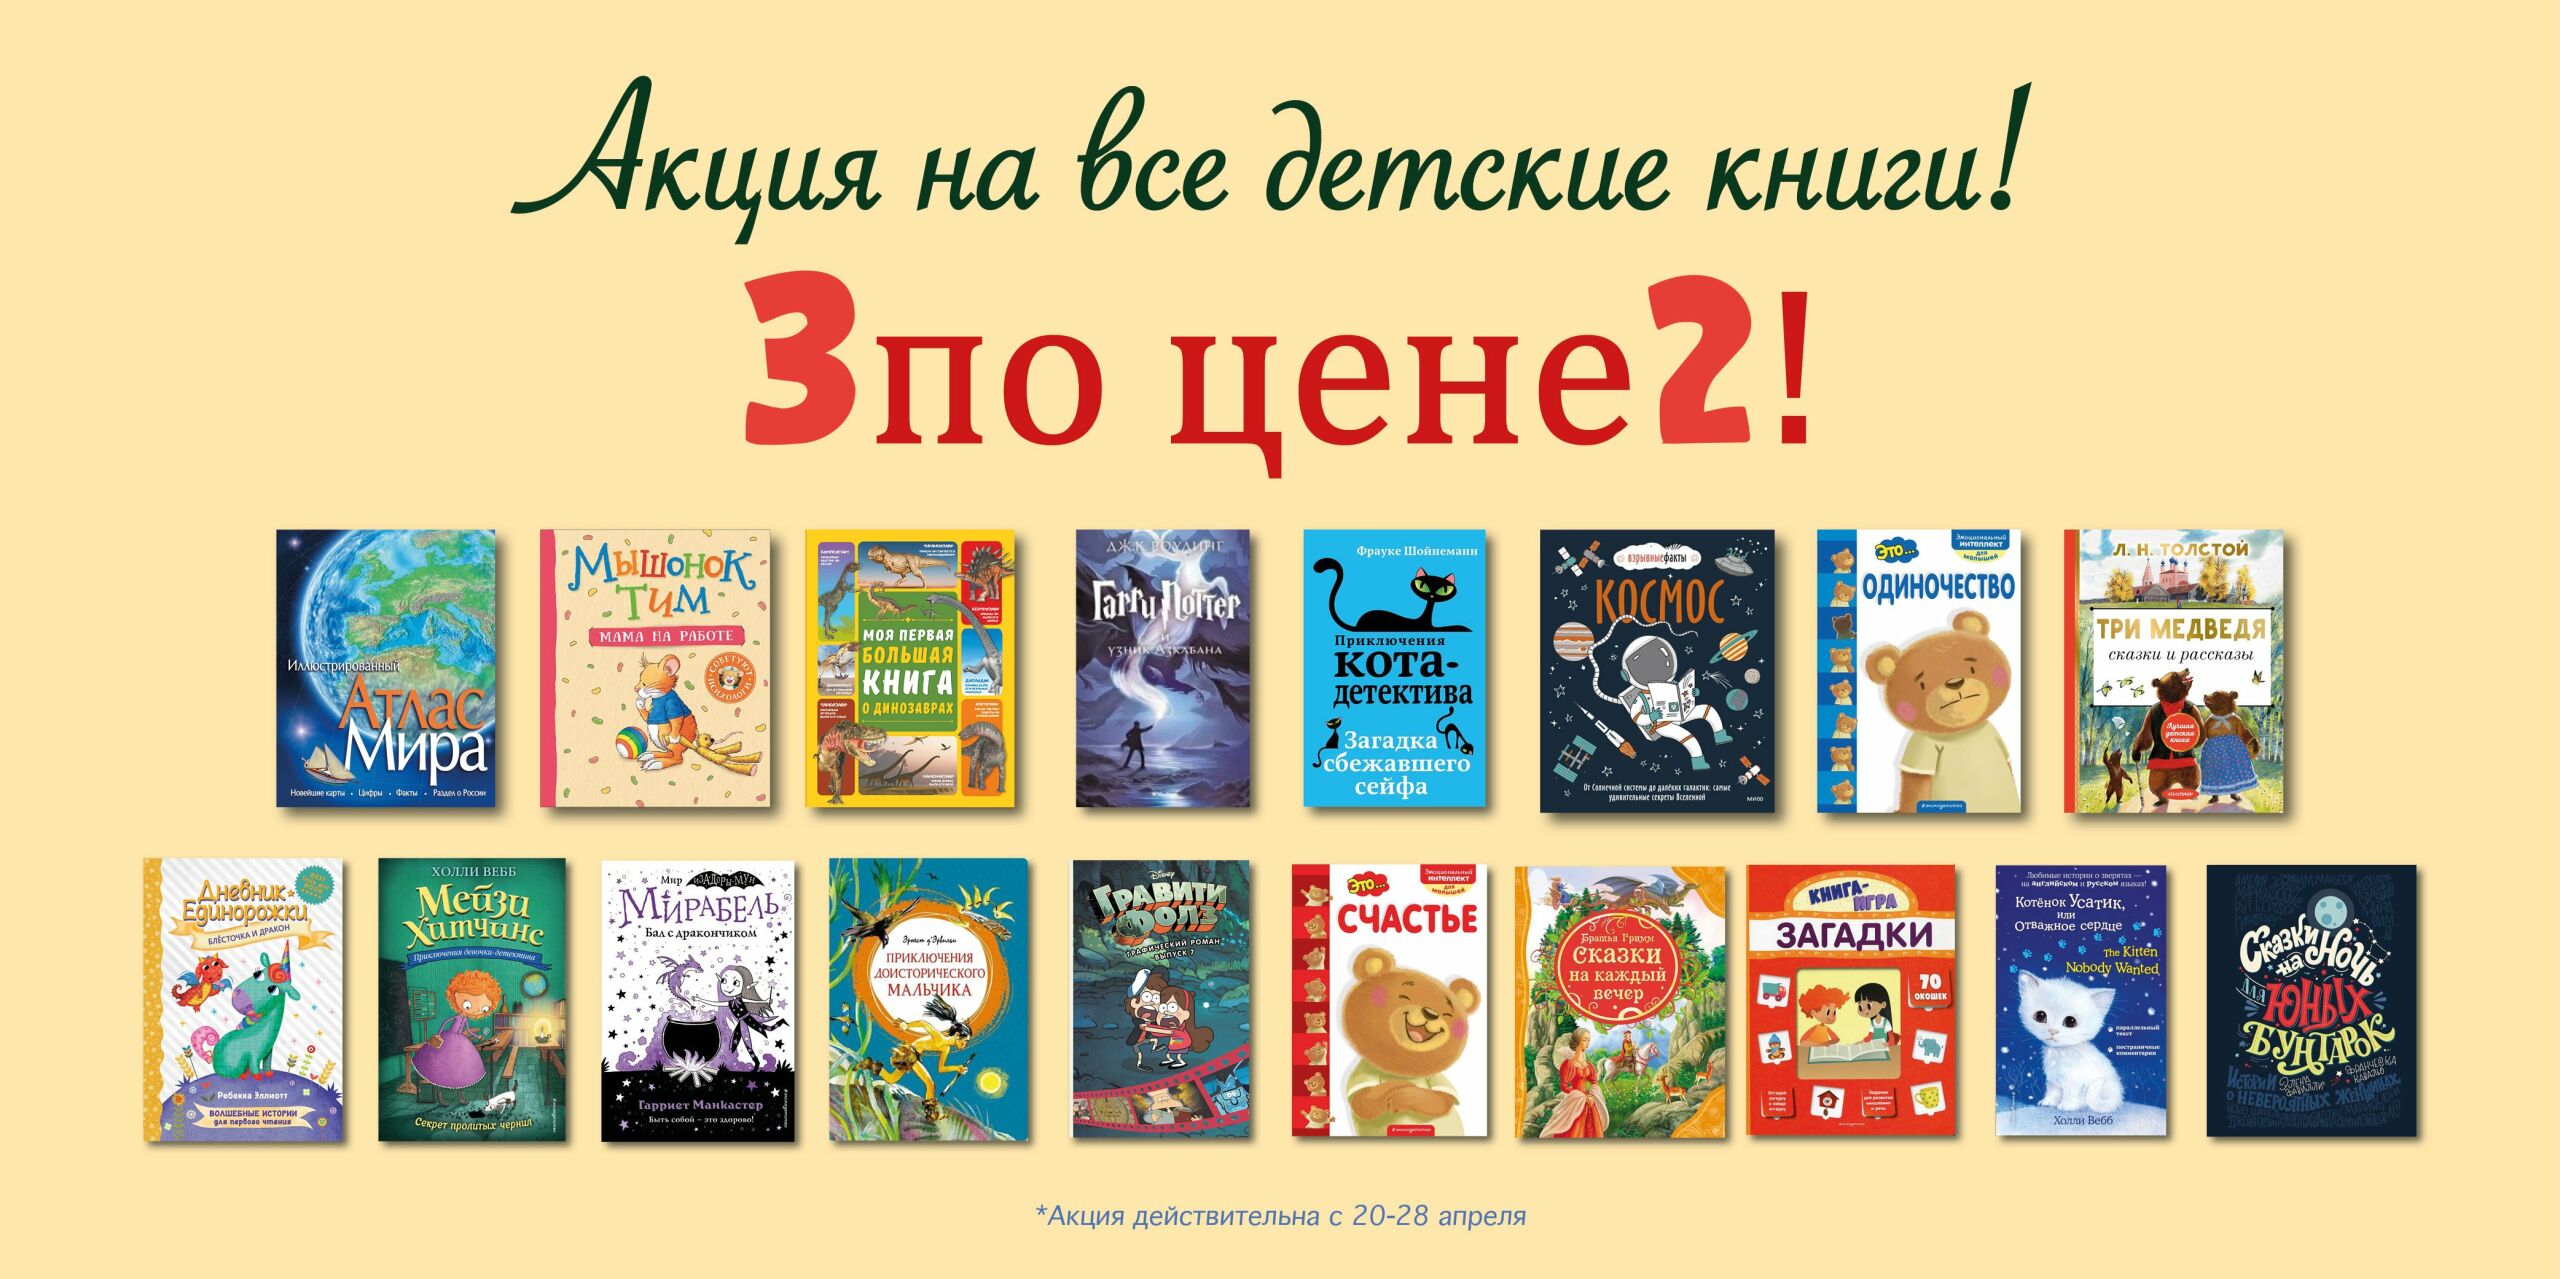 Rusça kitap 23 NİSAN